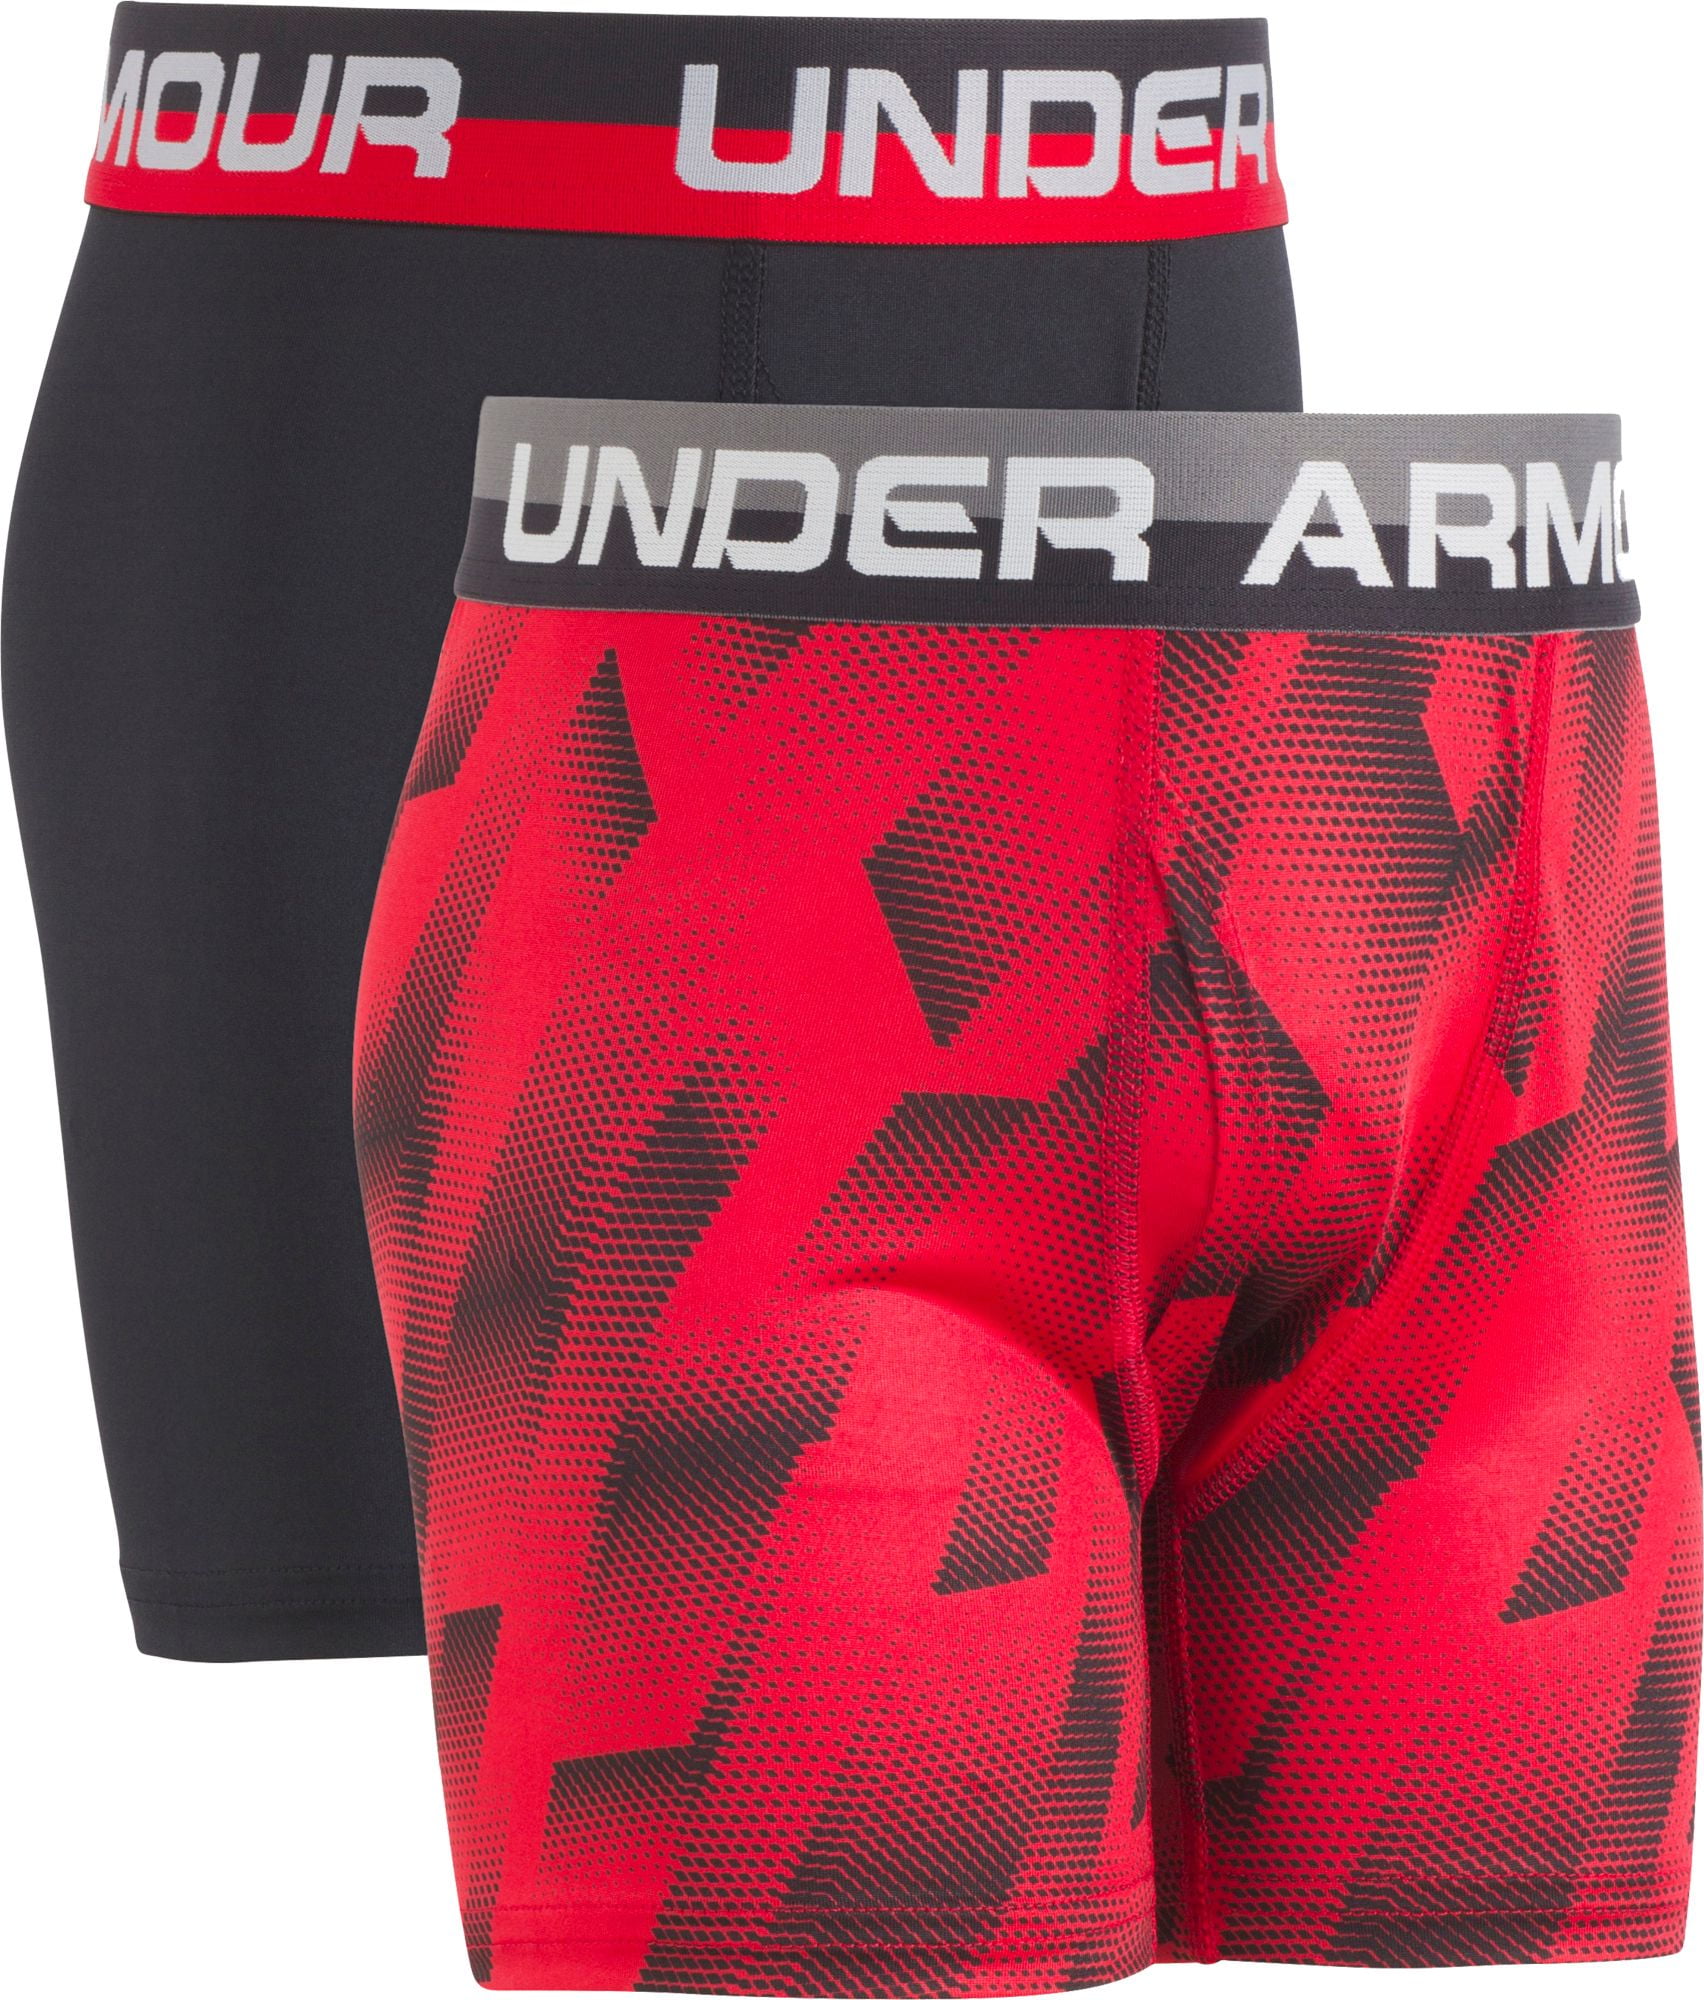 Under Armor Heatgear Underwear Youth Medium